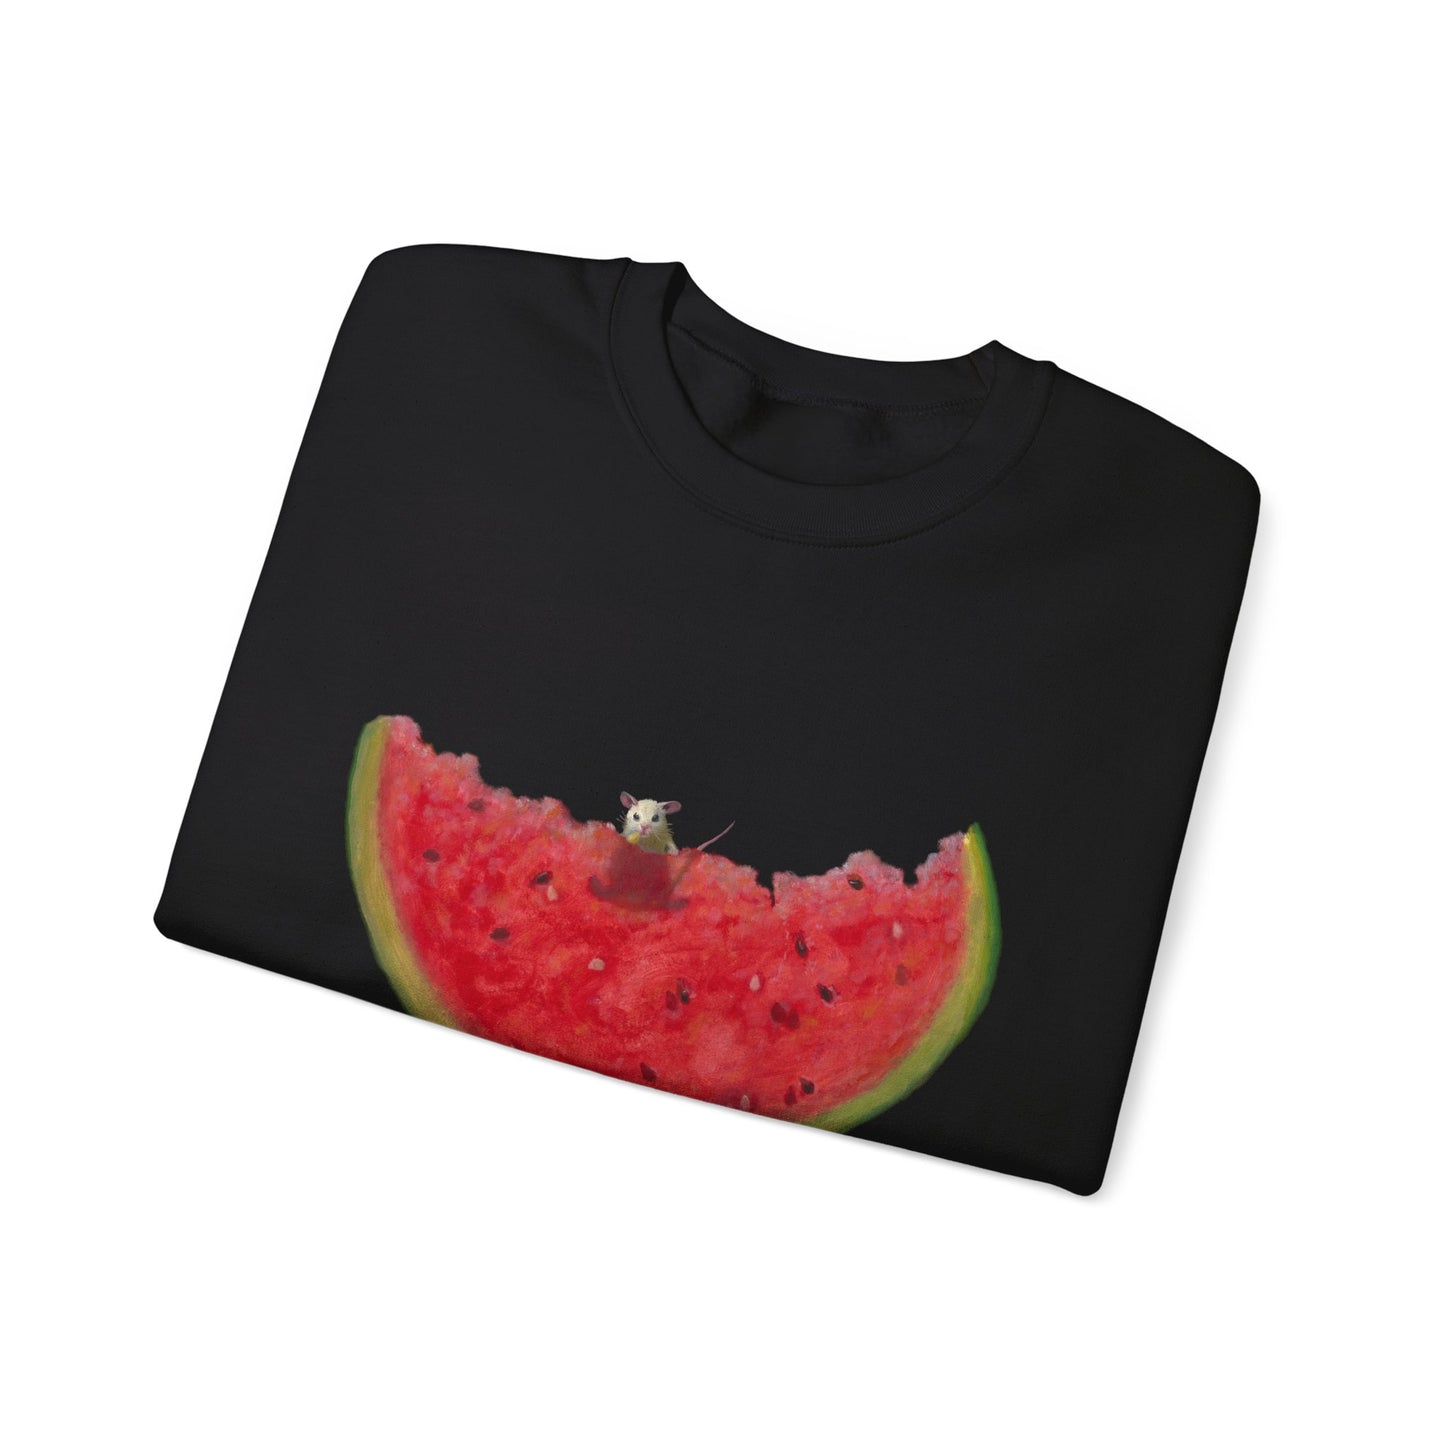 Stuart Dunkel: "Melon Lover" - Crewneck Sweatshirt